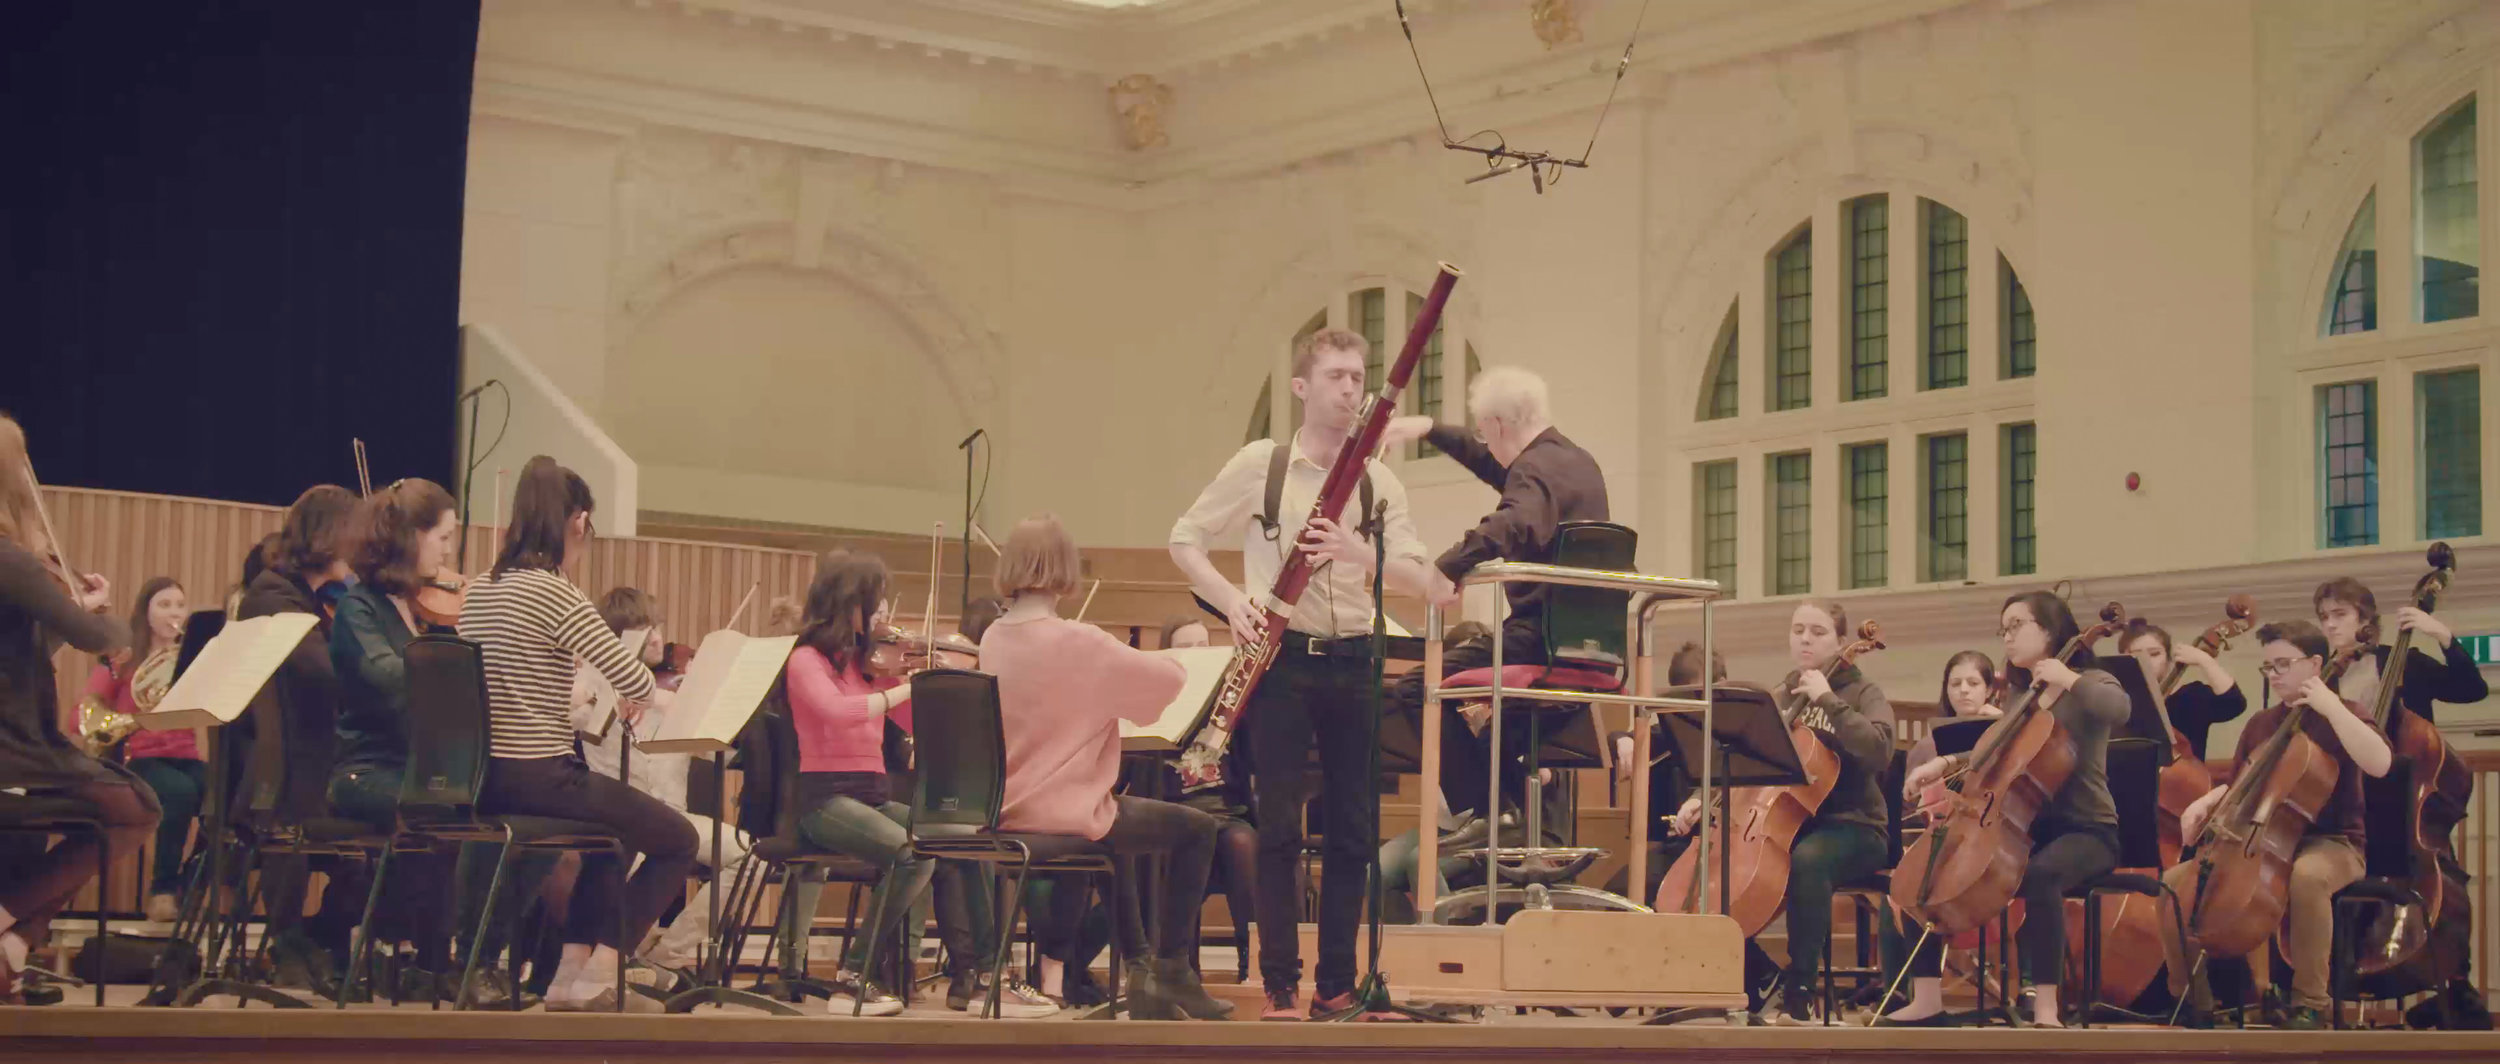 'Powering People' - Royal College of Music